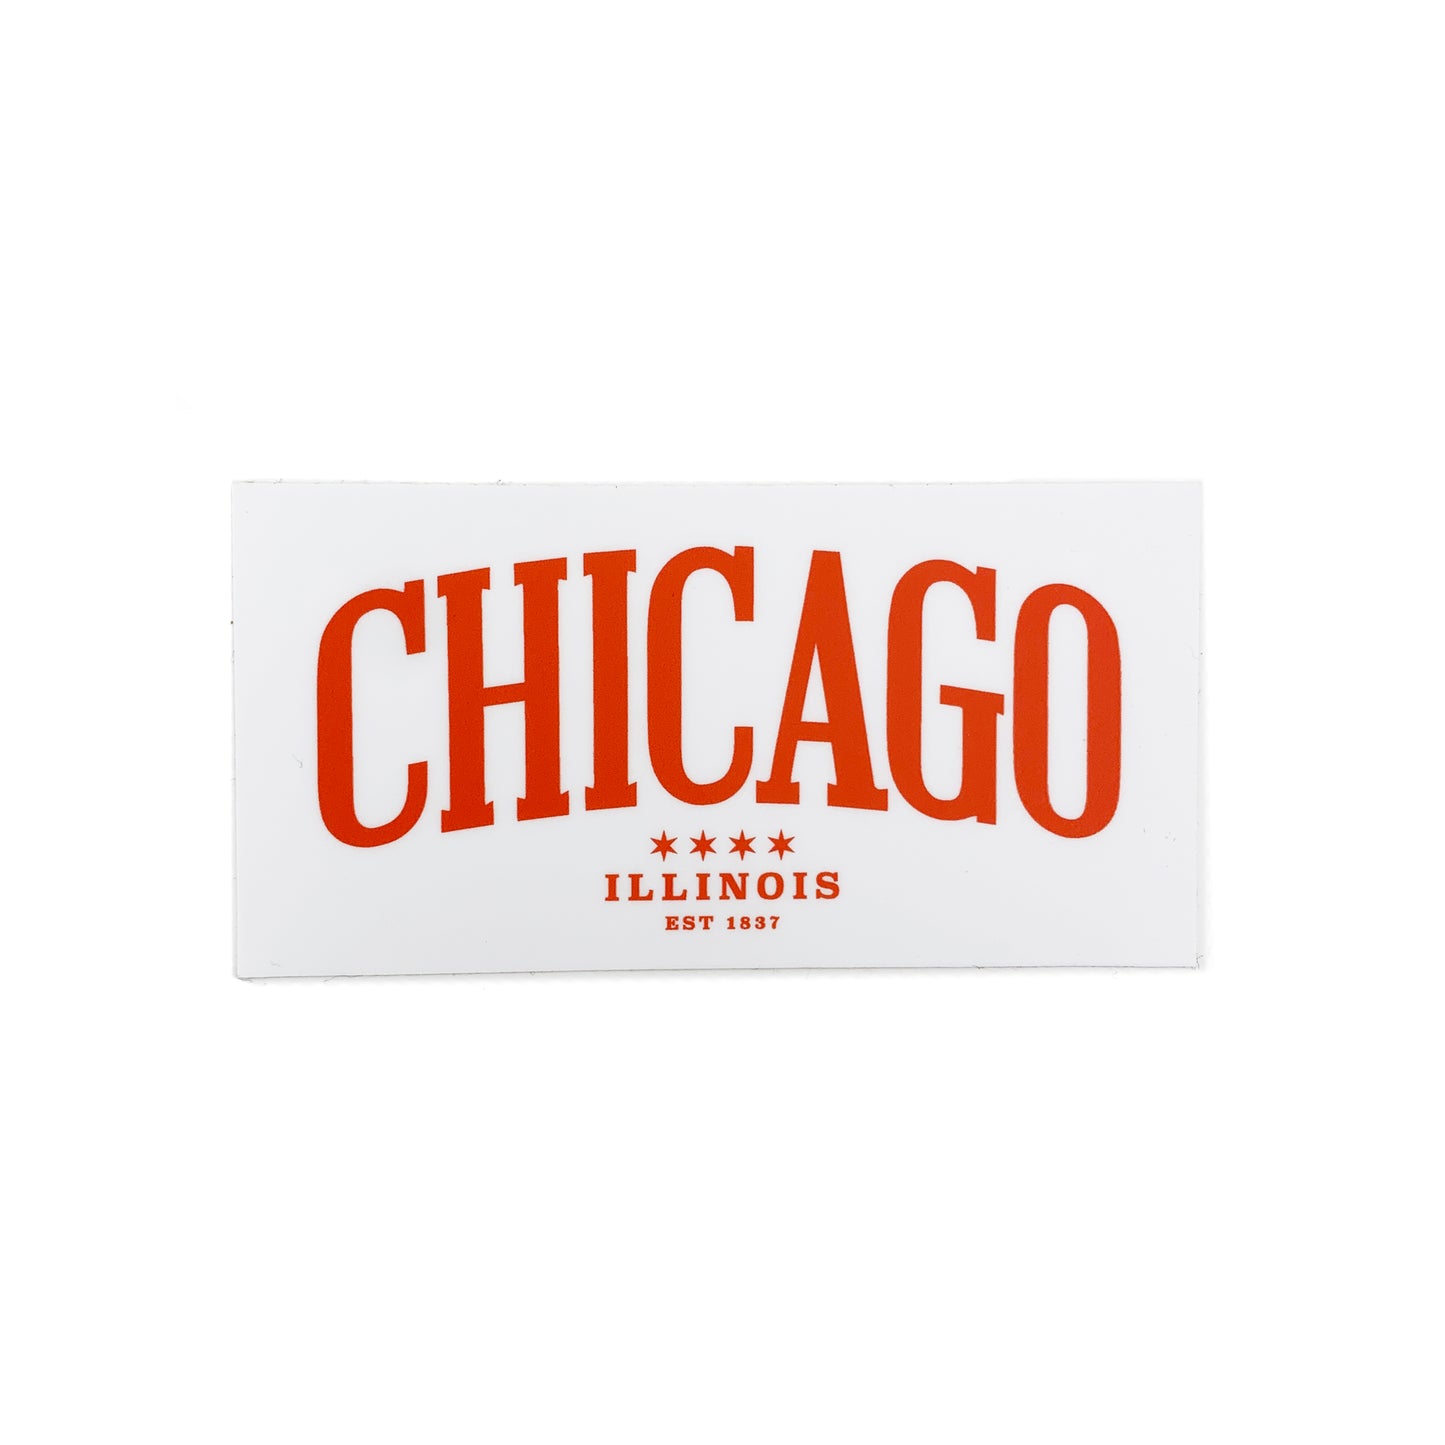 Chicago Block Type 4" x 2" Rectangular Sticker